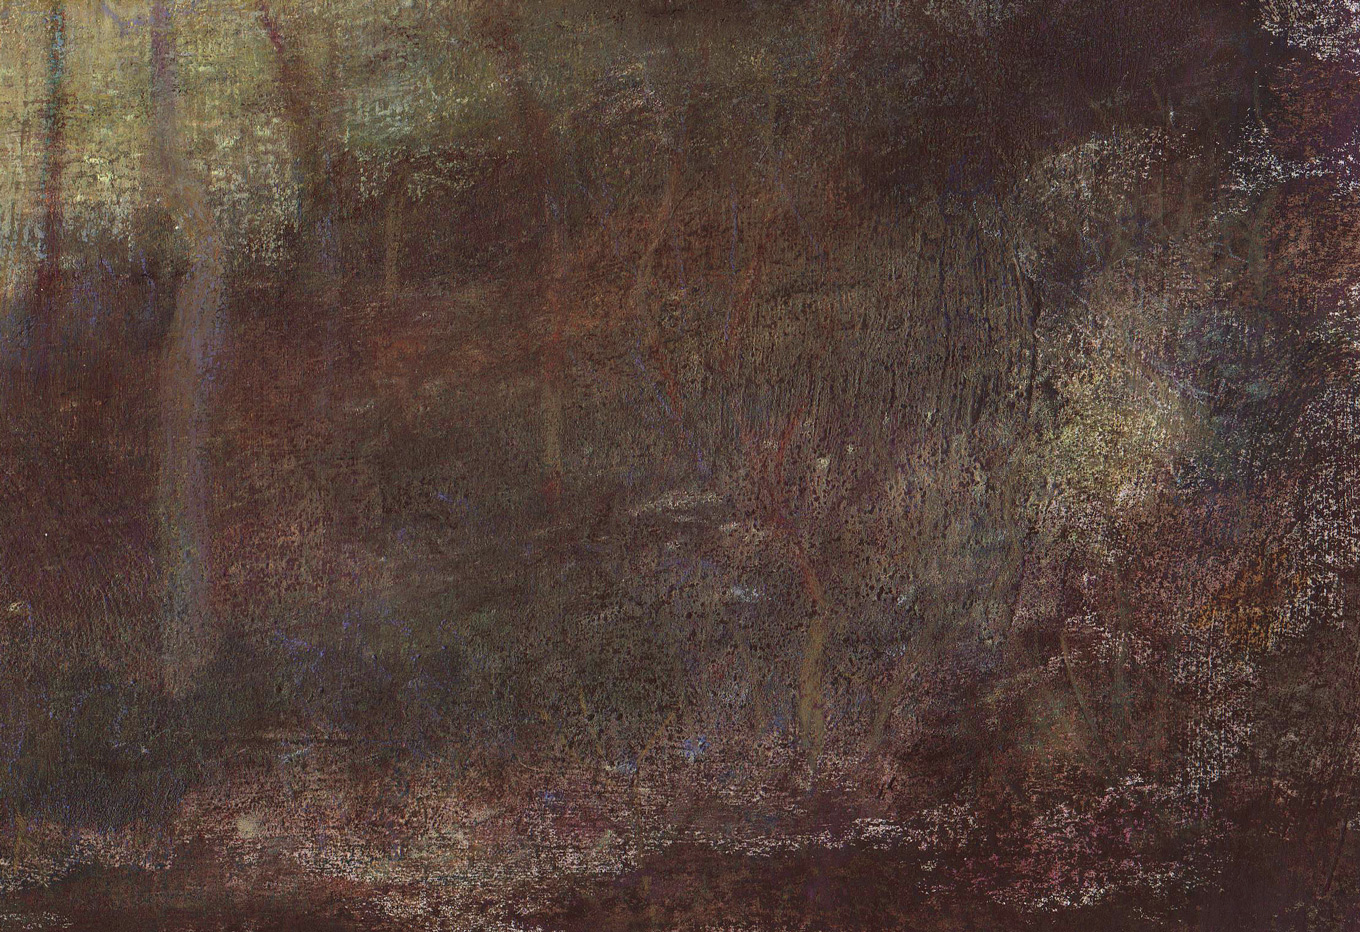 L1264 - Nicholas Herbert, British Artist, mixed media landscape painting of Mermaid Pond through trees, 2021